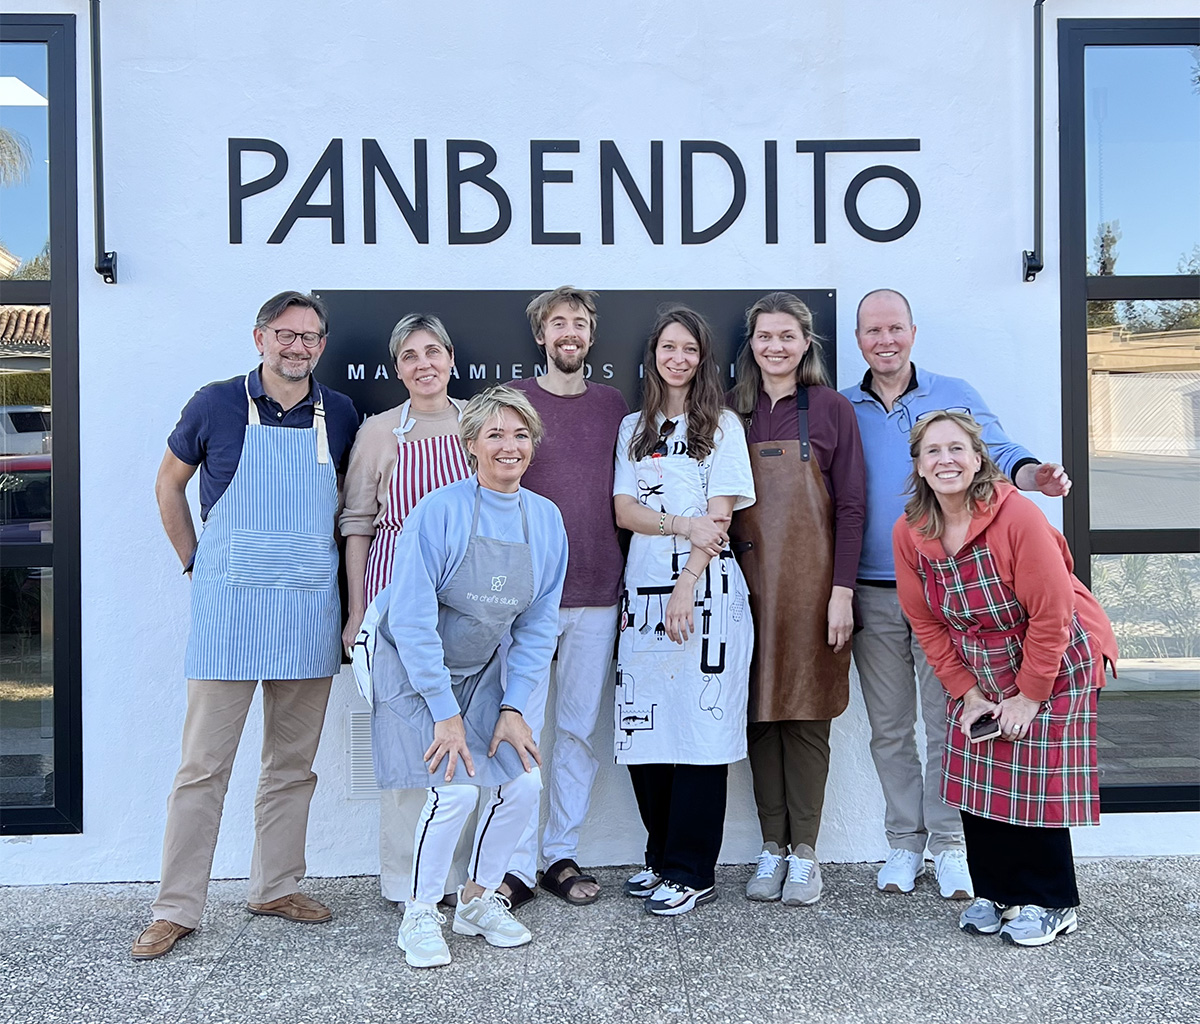 The happy participants at the Sourdough workshop at Pan Bendito.